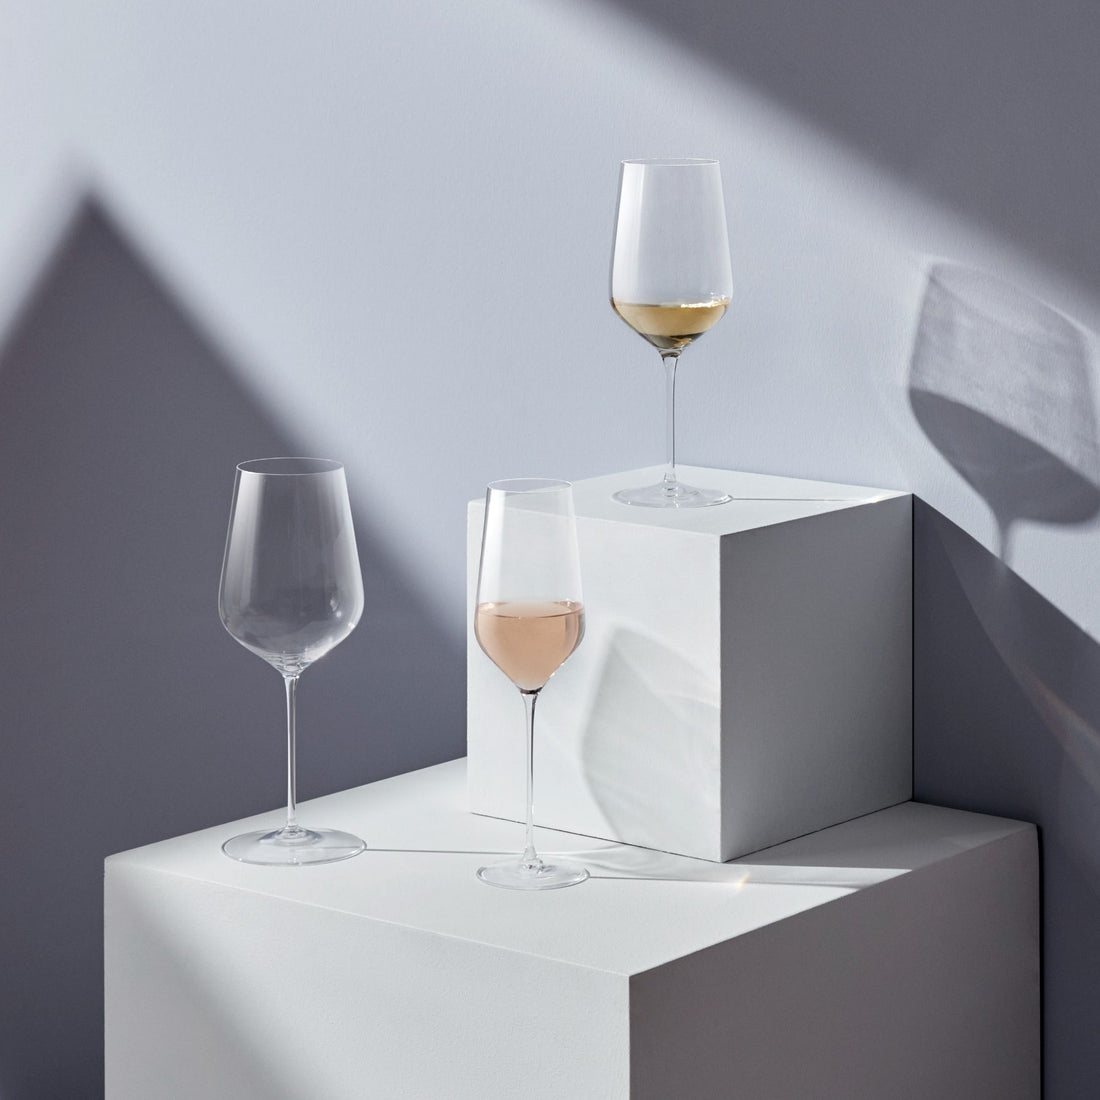 Stem Zero Trio White Wine Glass